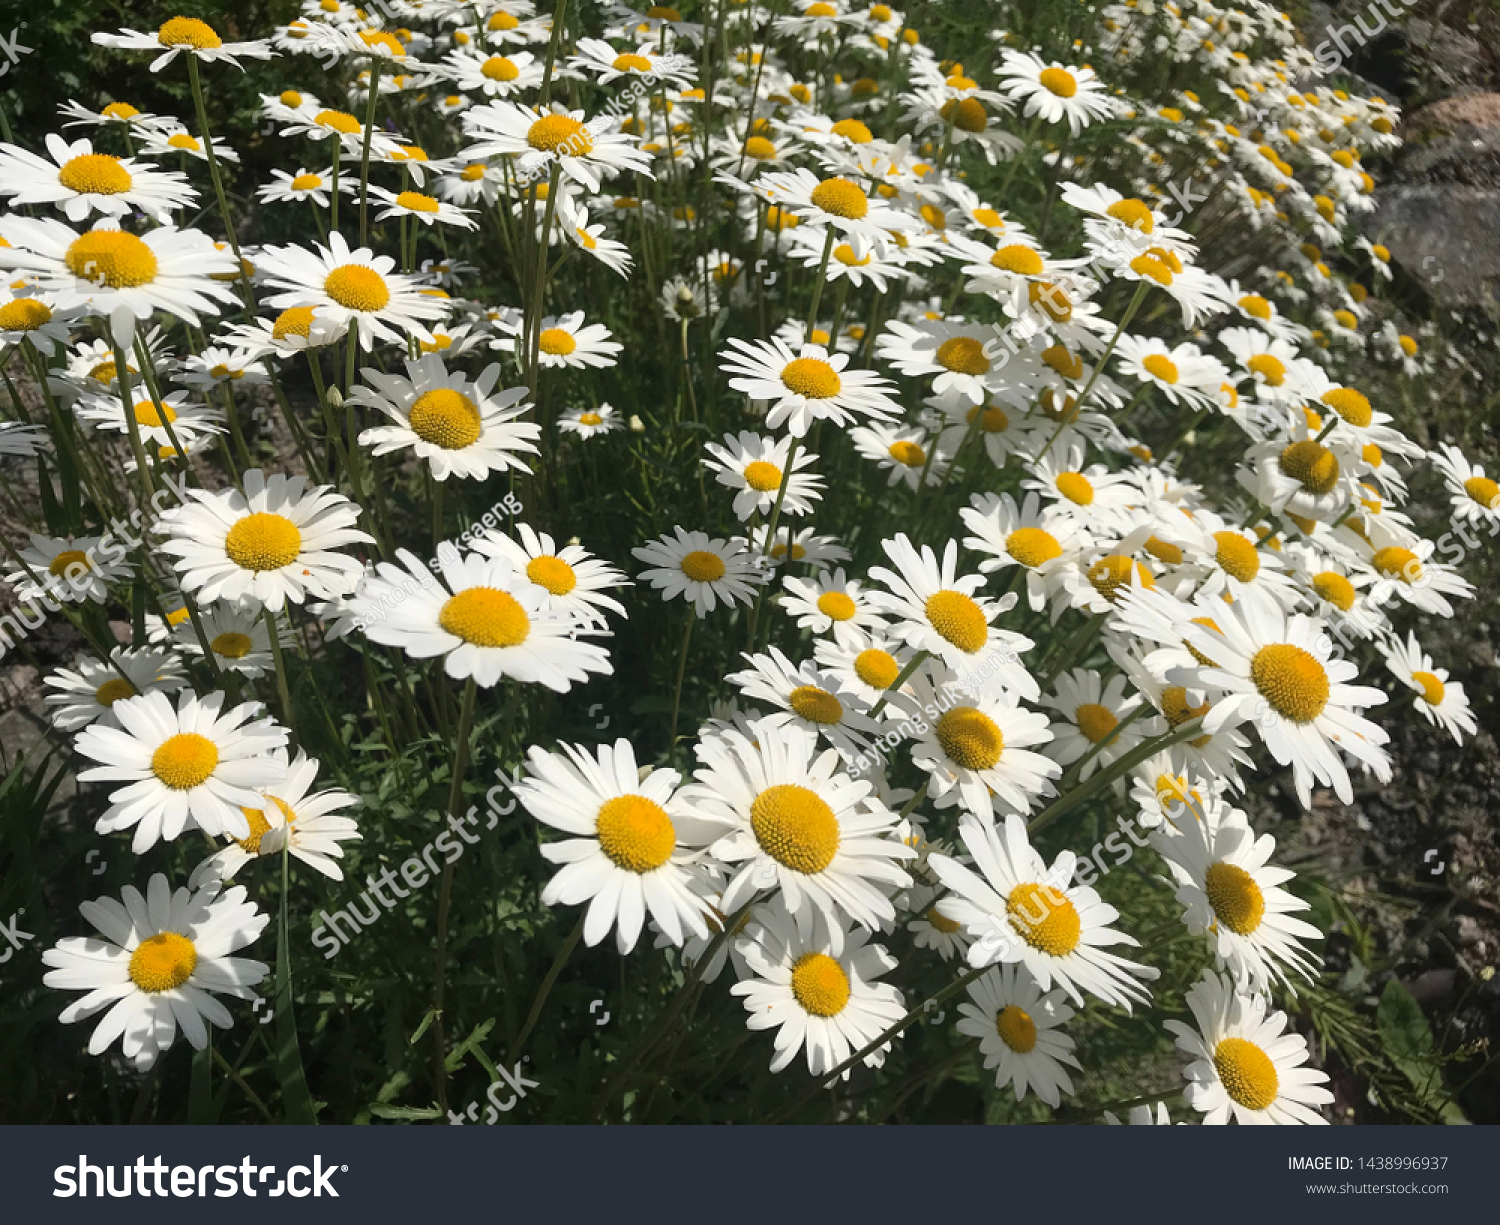 Flowering of daisies. Oxeye daisy, Leucanthemum vulgare, Daisies, Dox-eye, Common daisy, Dog daisy, Moon daisy. Macro details of white colored. #1438996937